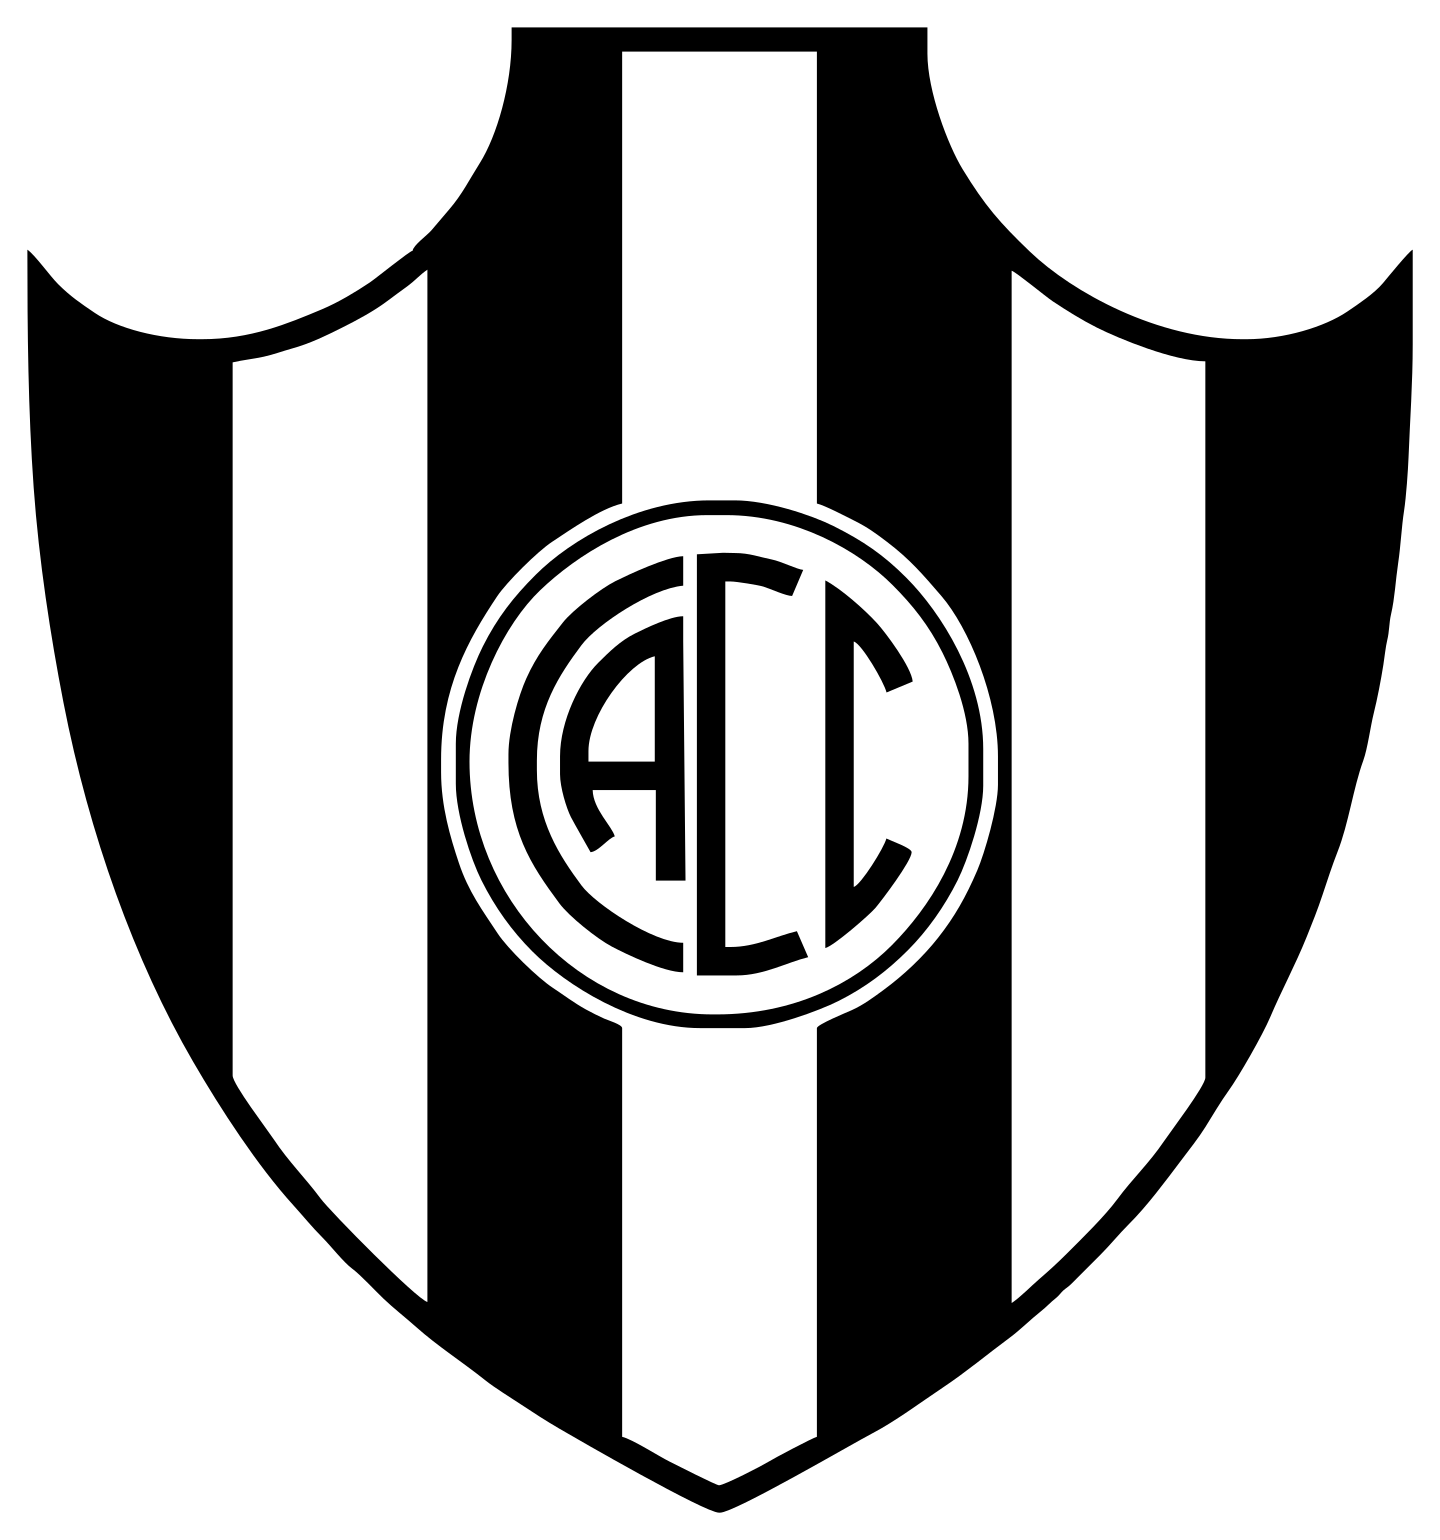 central cordoba logo 2 - Central Córdoba Logo